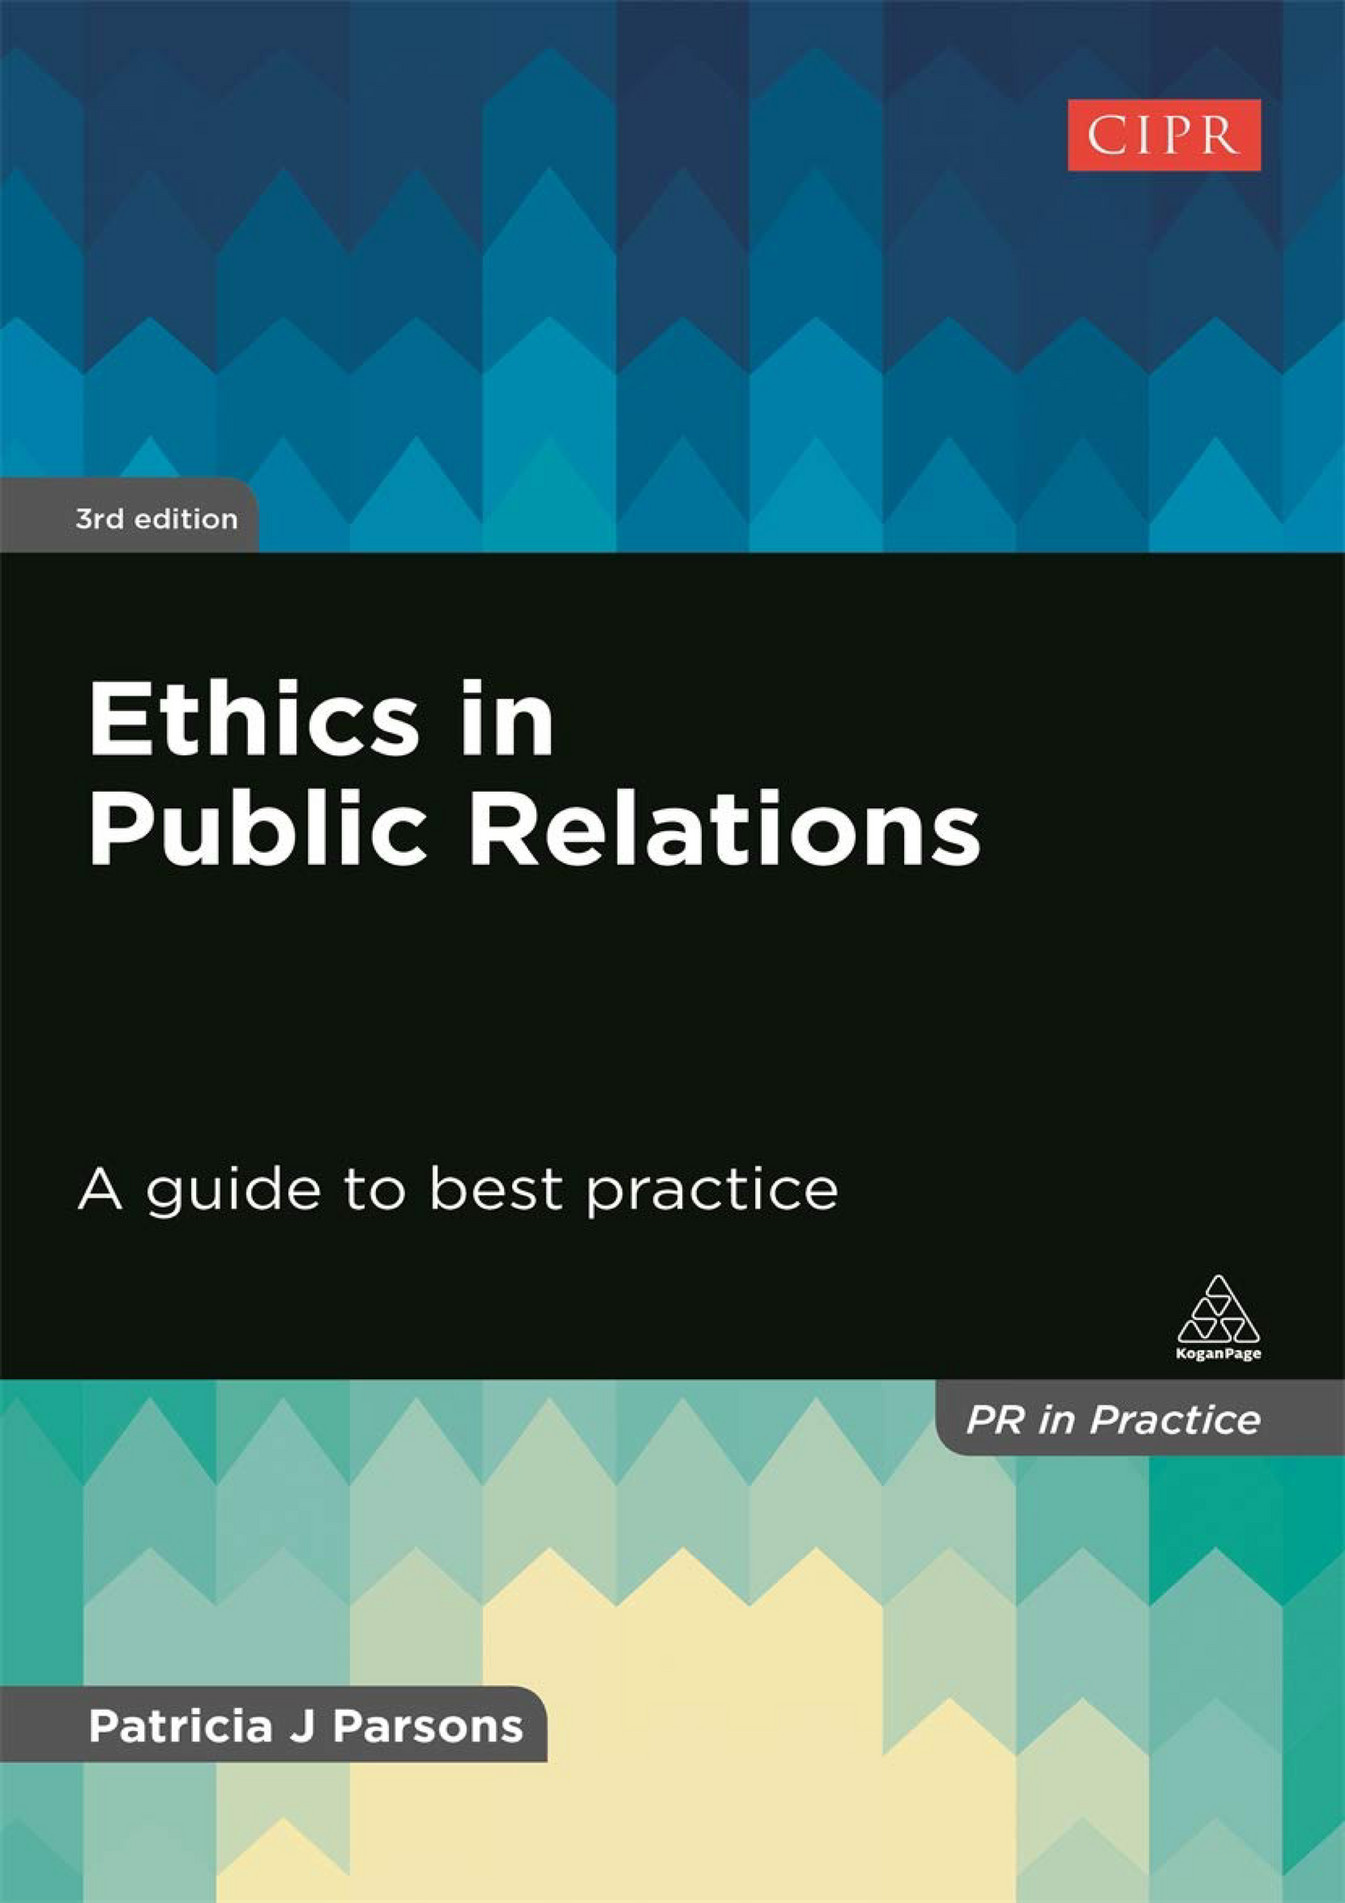 public relations ethics case study #6